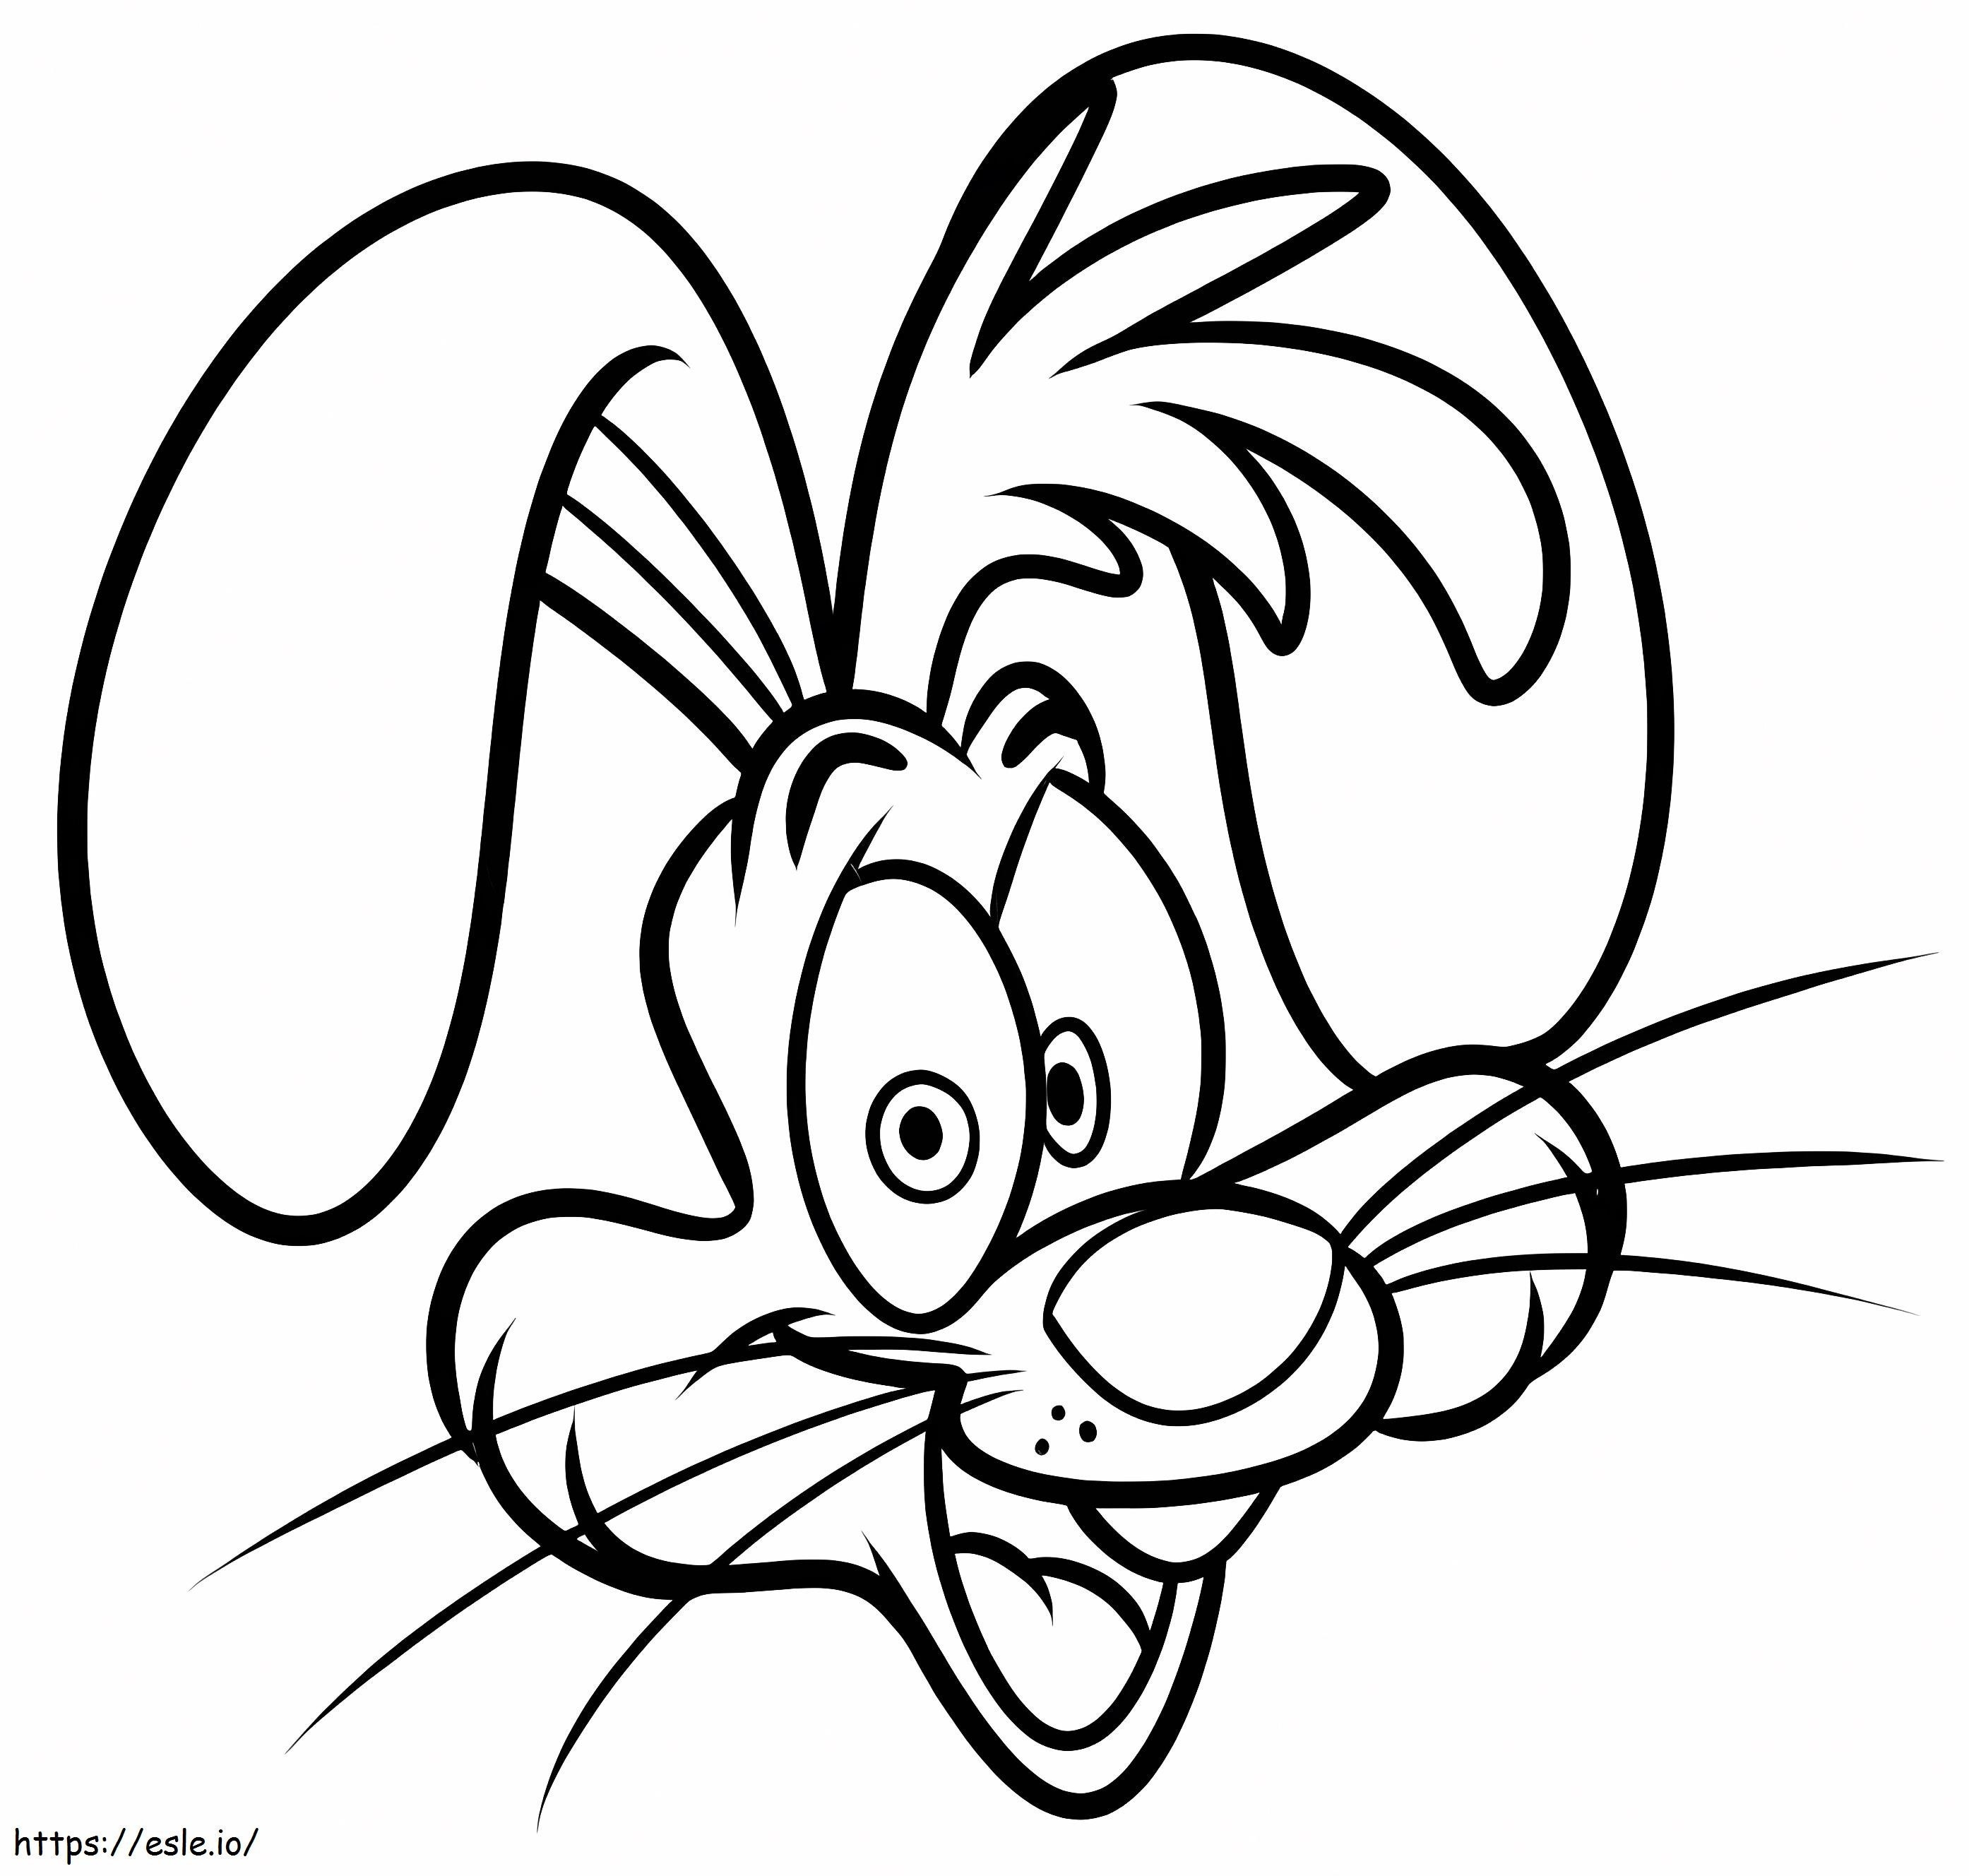 Roger Rabbits Gesicht ausmalbilder